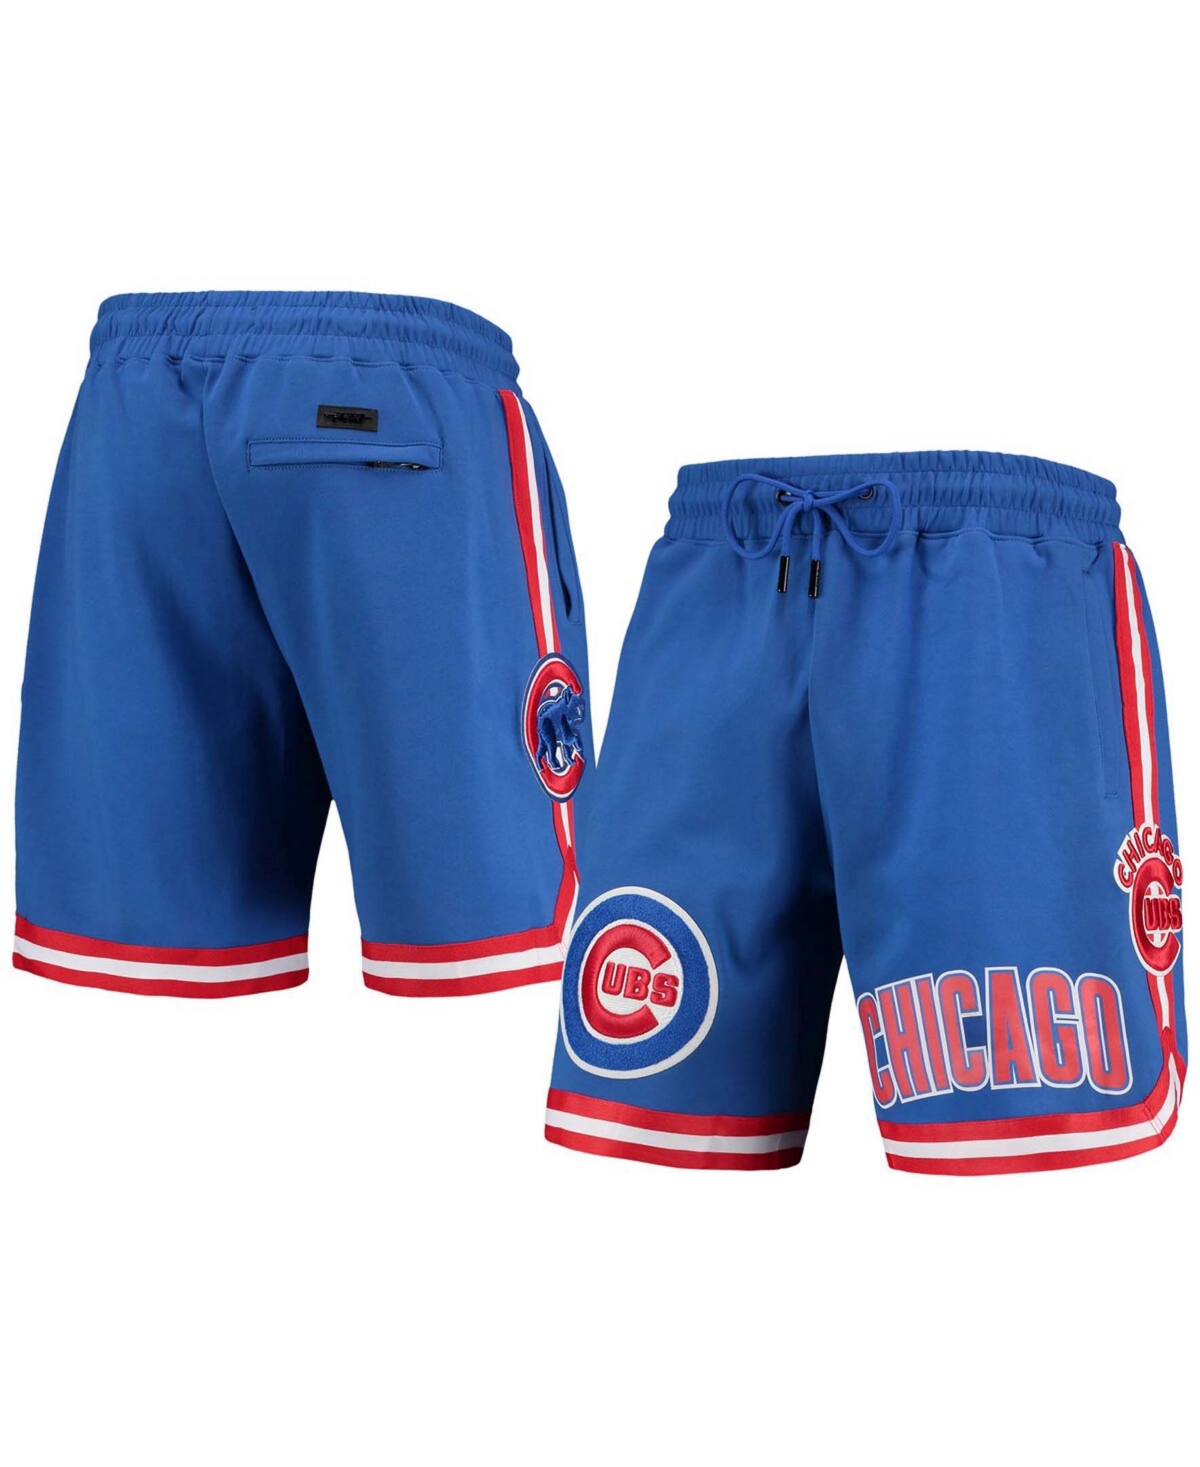 Men's Royal Chicago Cubs Team Shorts - Royal